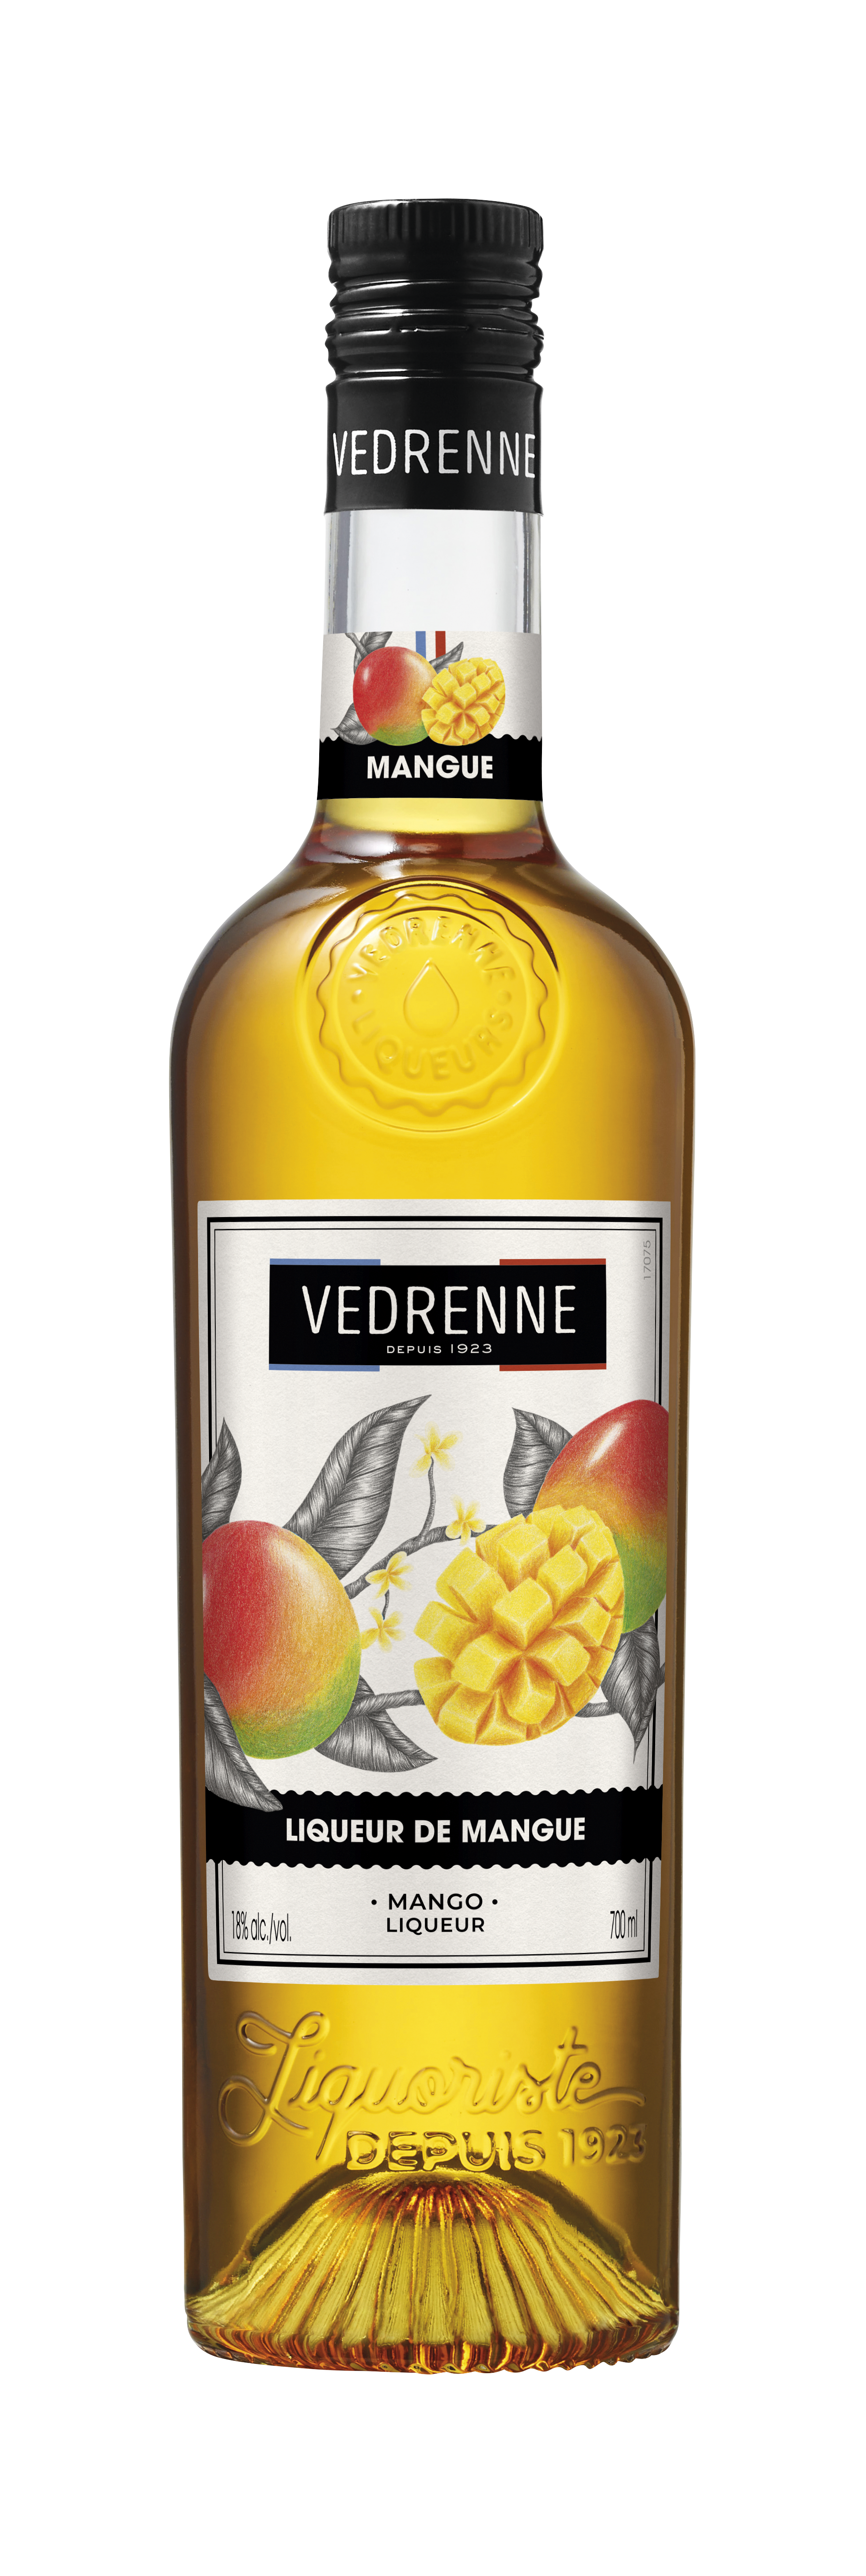 VEDRENNE Mango Liqueur 18% - 700ml